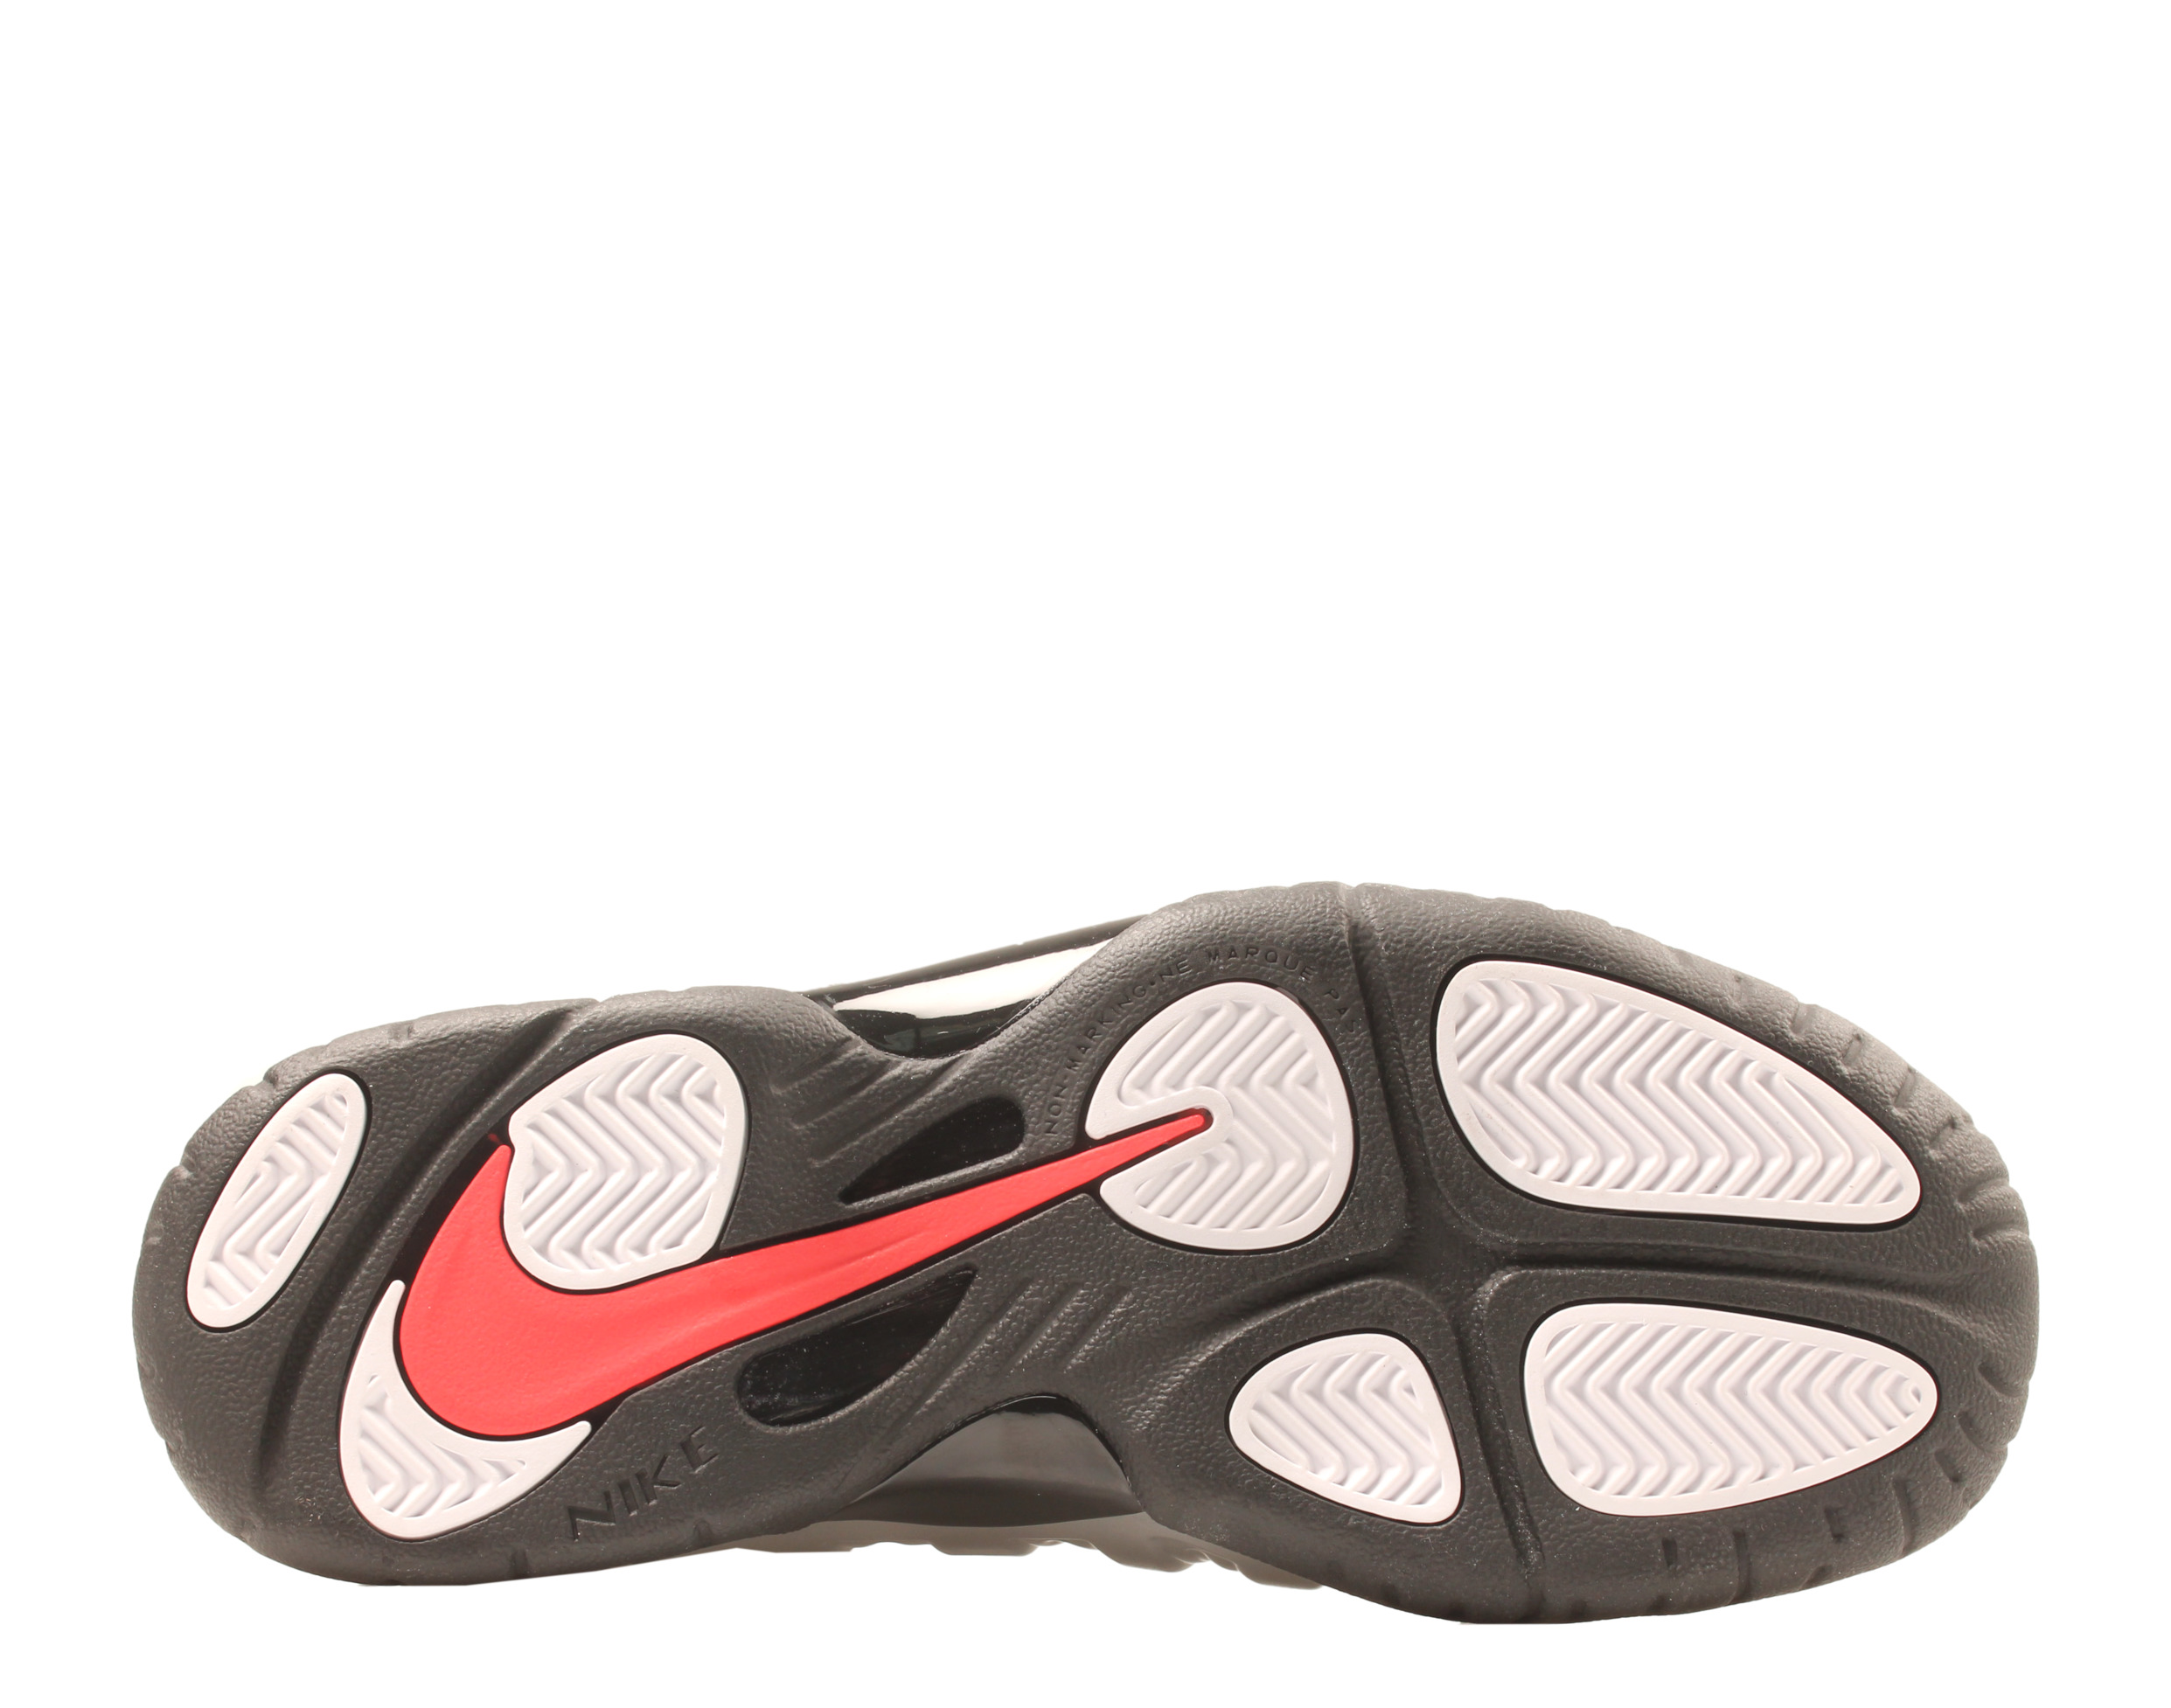 Nike Little Posite One KSA GS Big Kids Basketball Shoes Size 4 - image 5 of 6